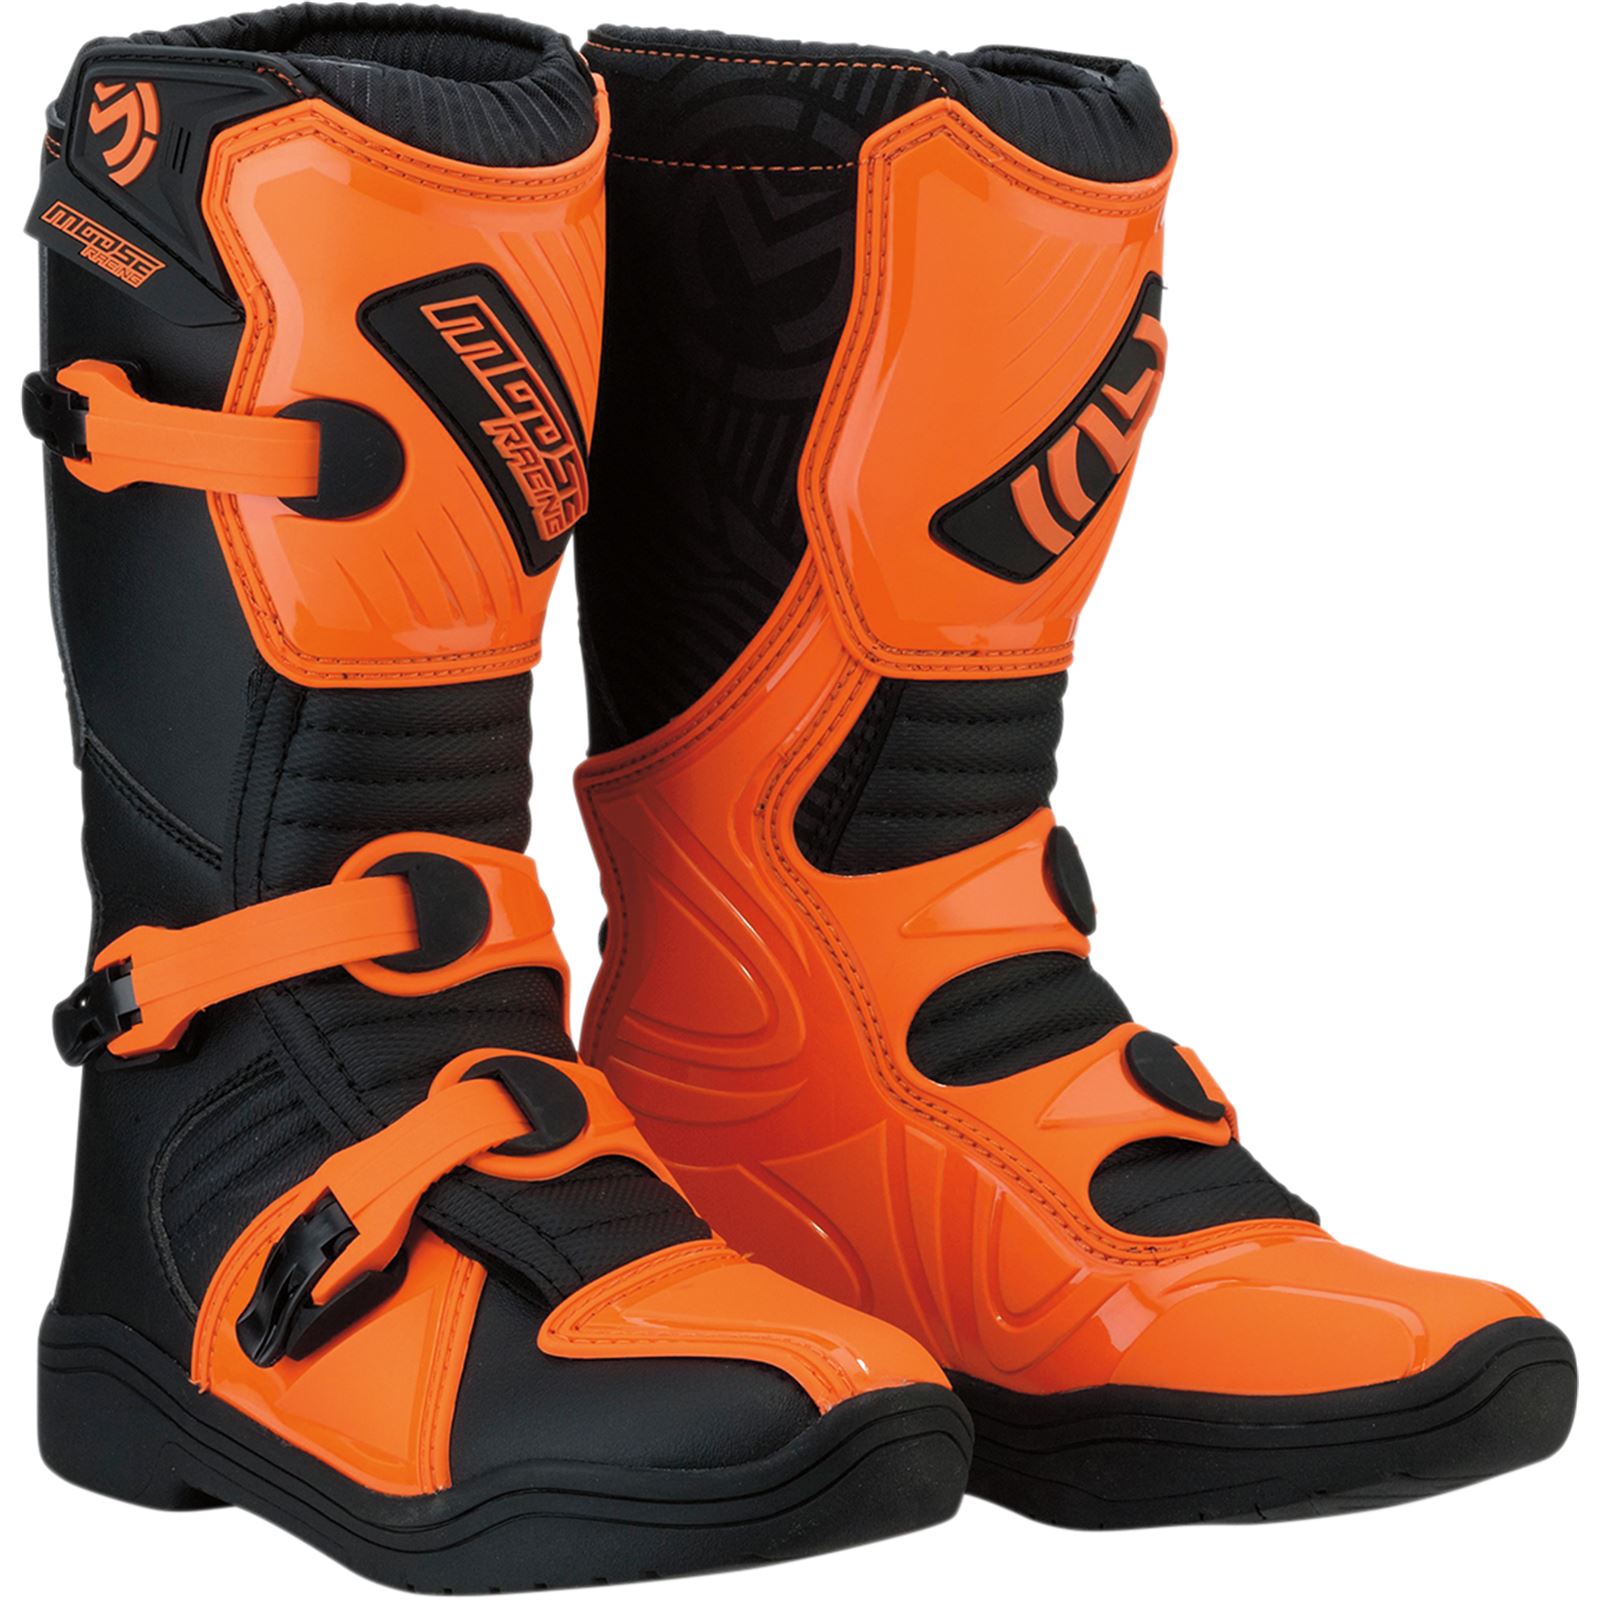 Moose Racing M1.3 Youth Boots - Black/Orange